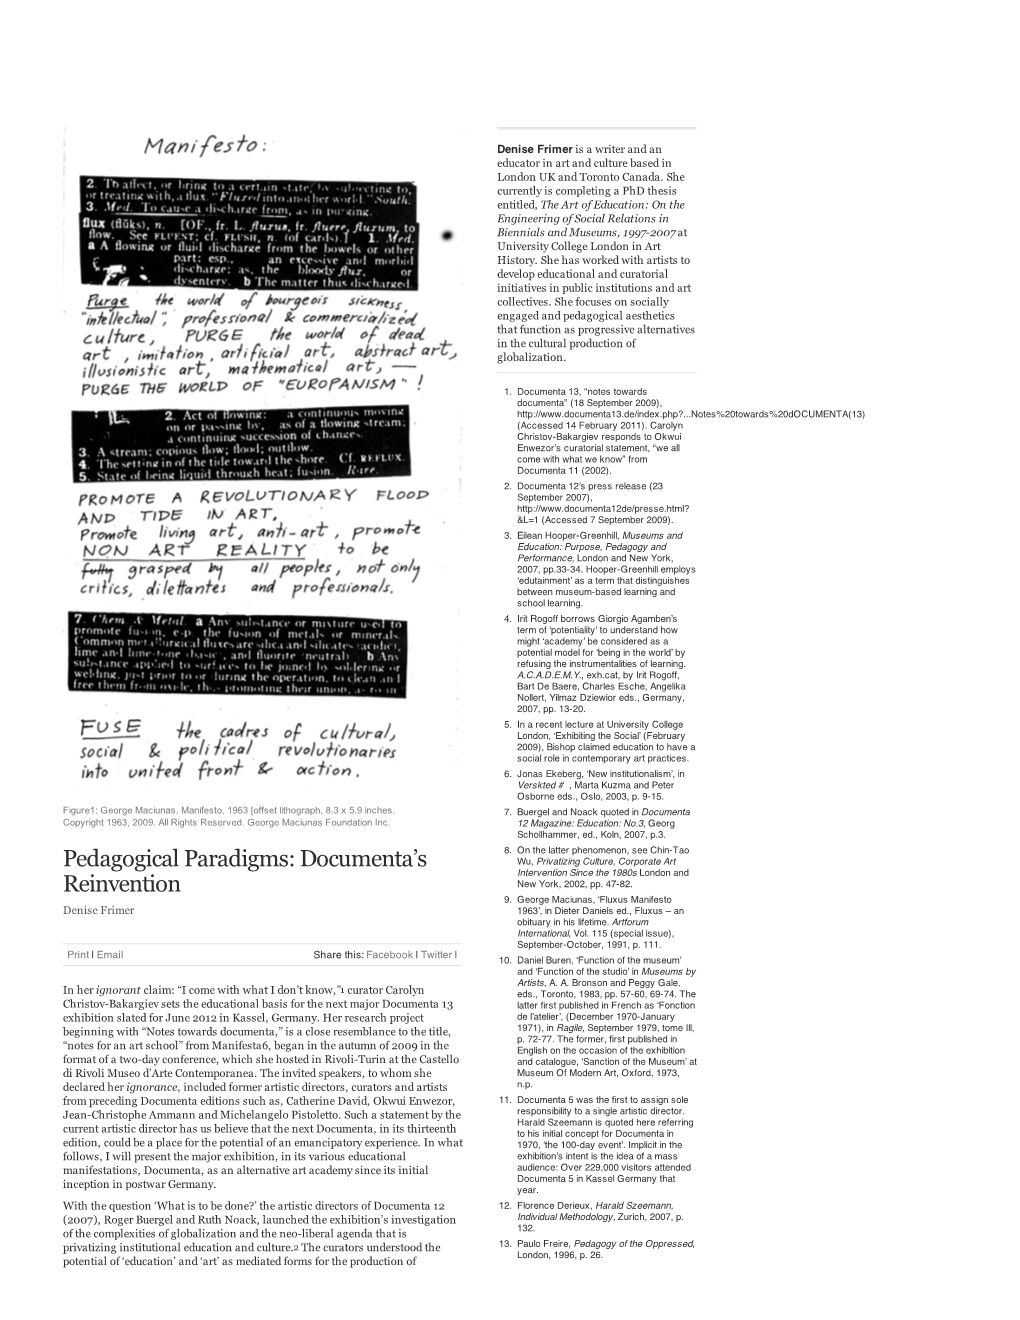 Pedagogical Paradigms Documenta's Reinvention | Art